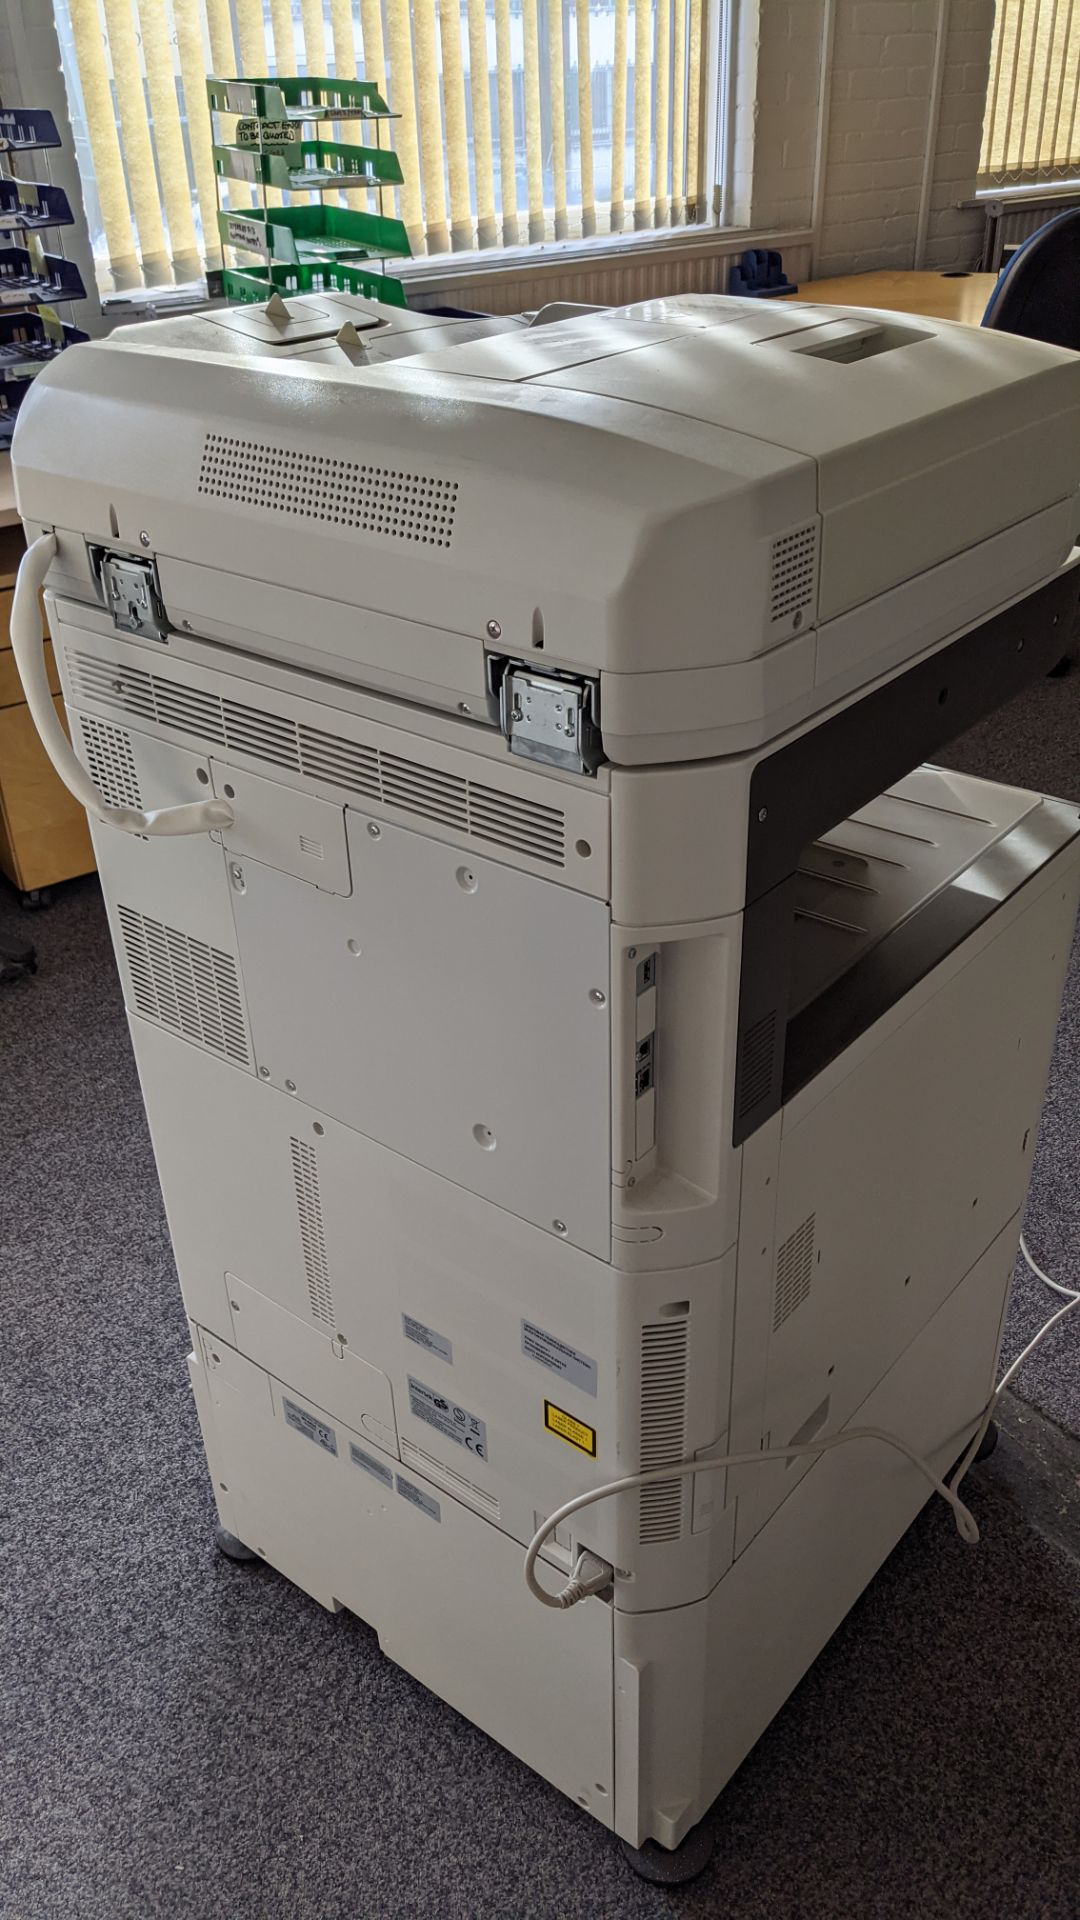 Sharp MX3070 floor standing copier with multi paper bins, touchscreen control, ADF, etc. - Image 6 of 13